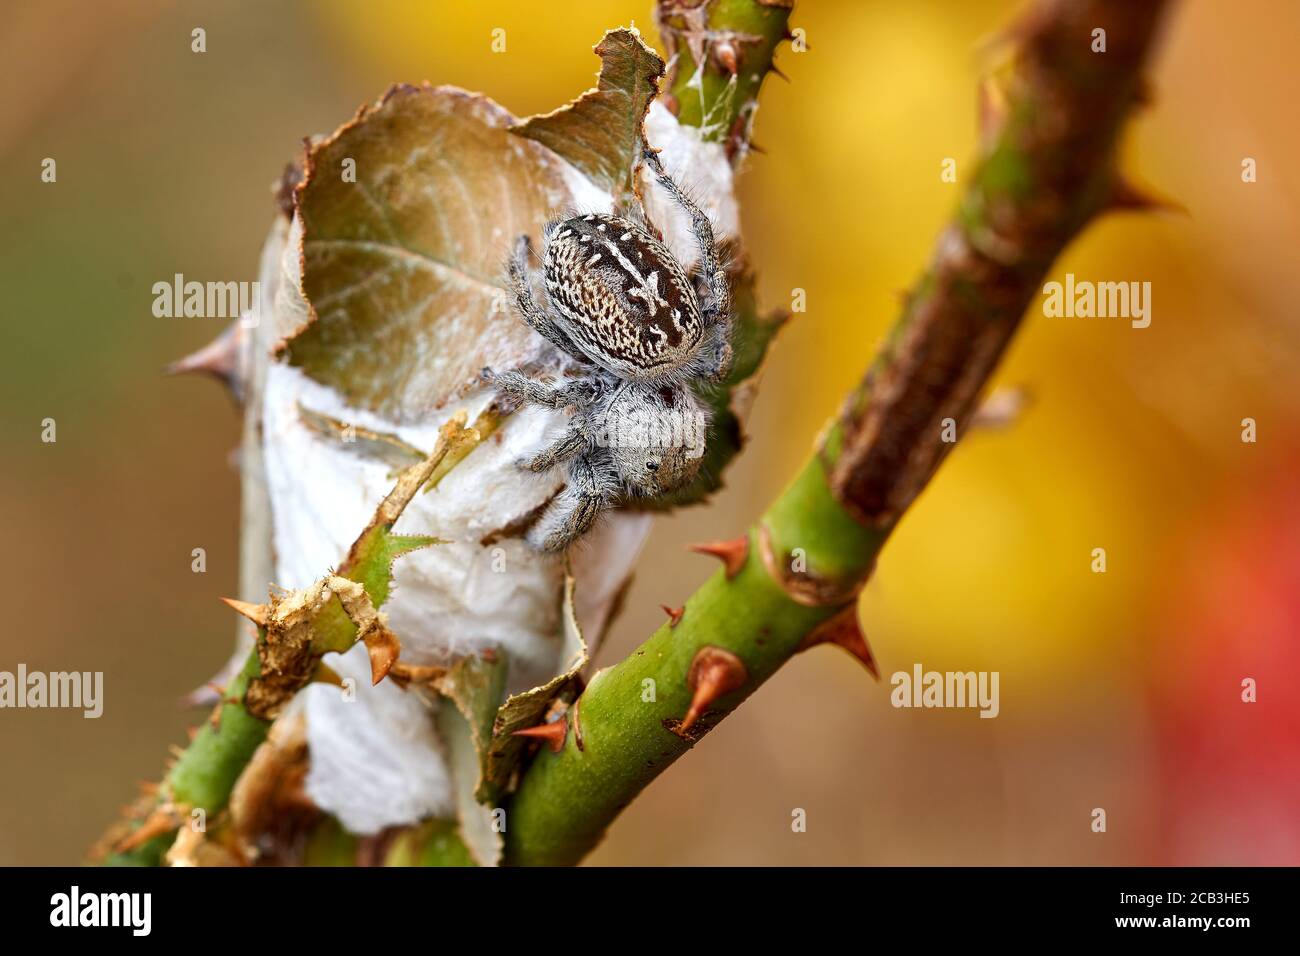 Closeup of a Beautiful healthy female Texas Jumping Spider (Phidippus texanus) Stock Photo